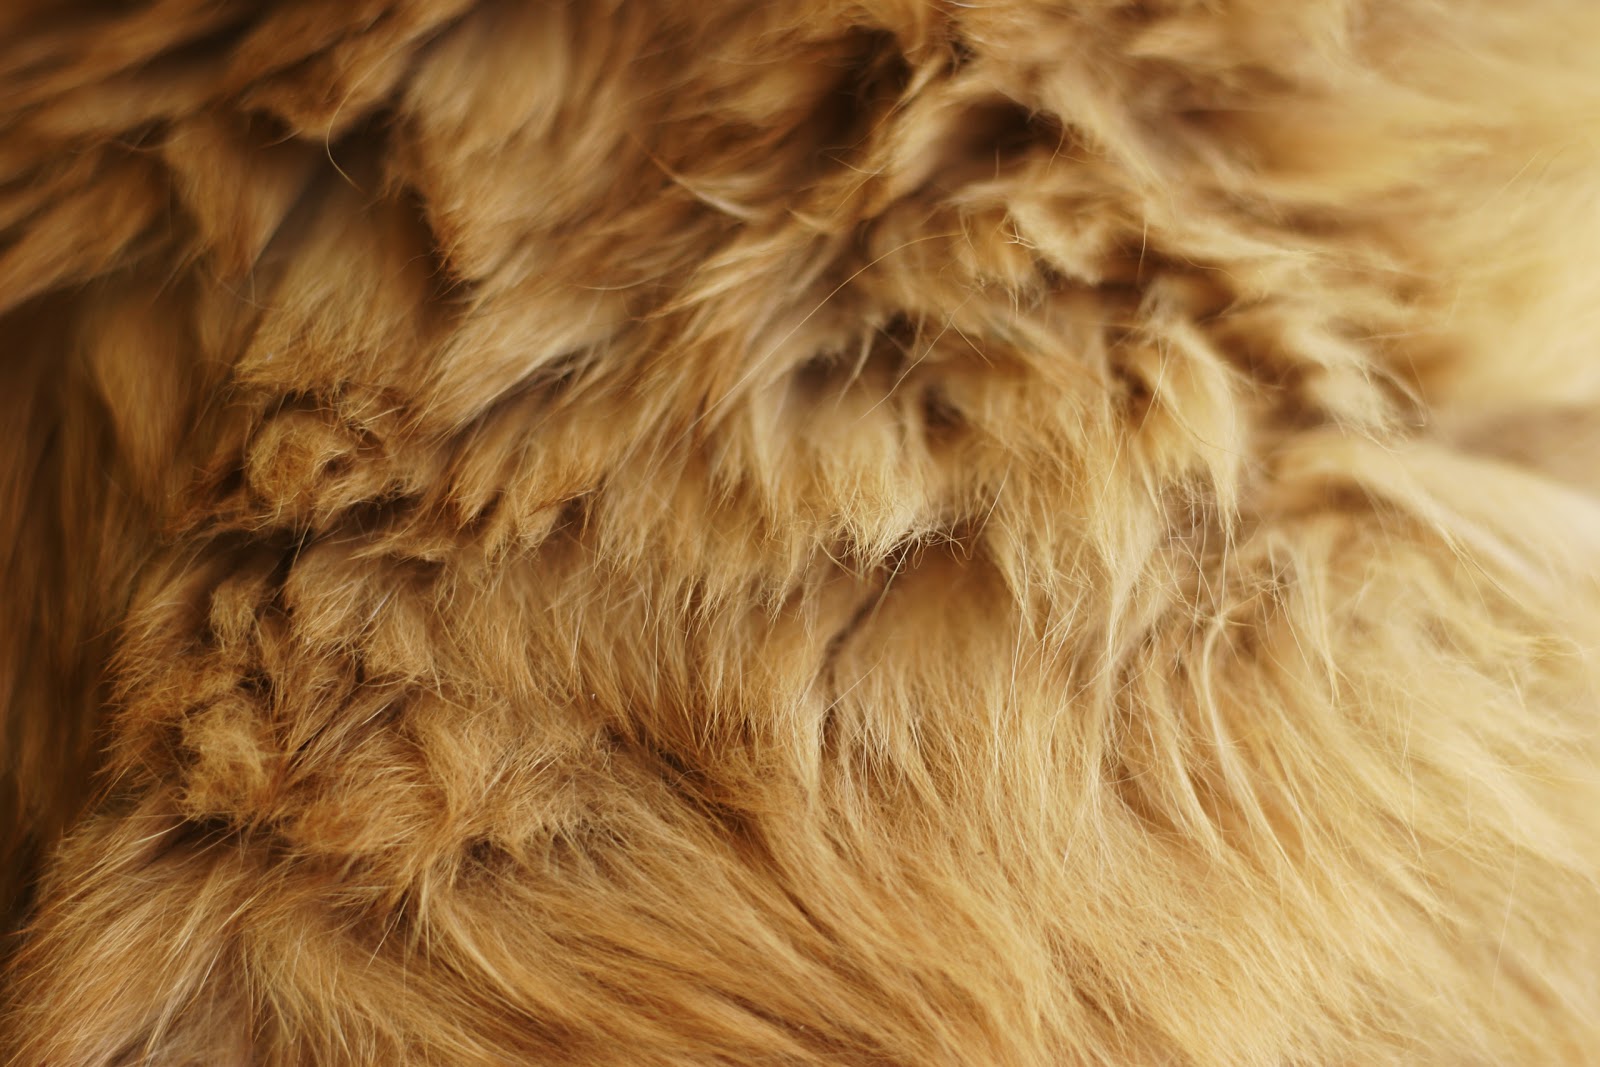 Magazines-24: Fur wallpaper, fur fabric, bedroom wallpaper